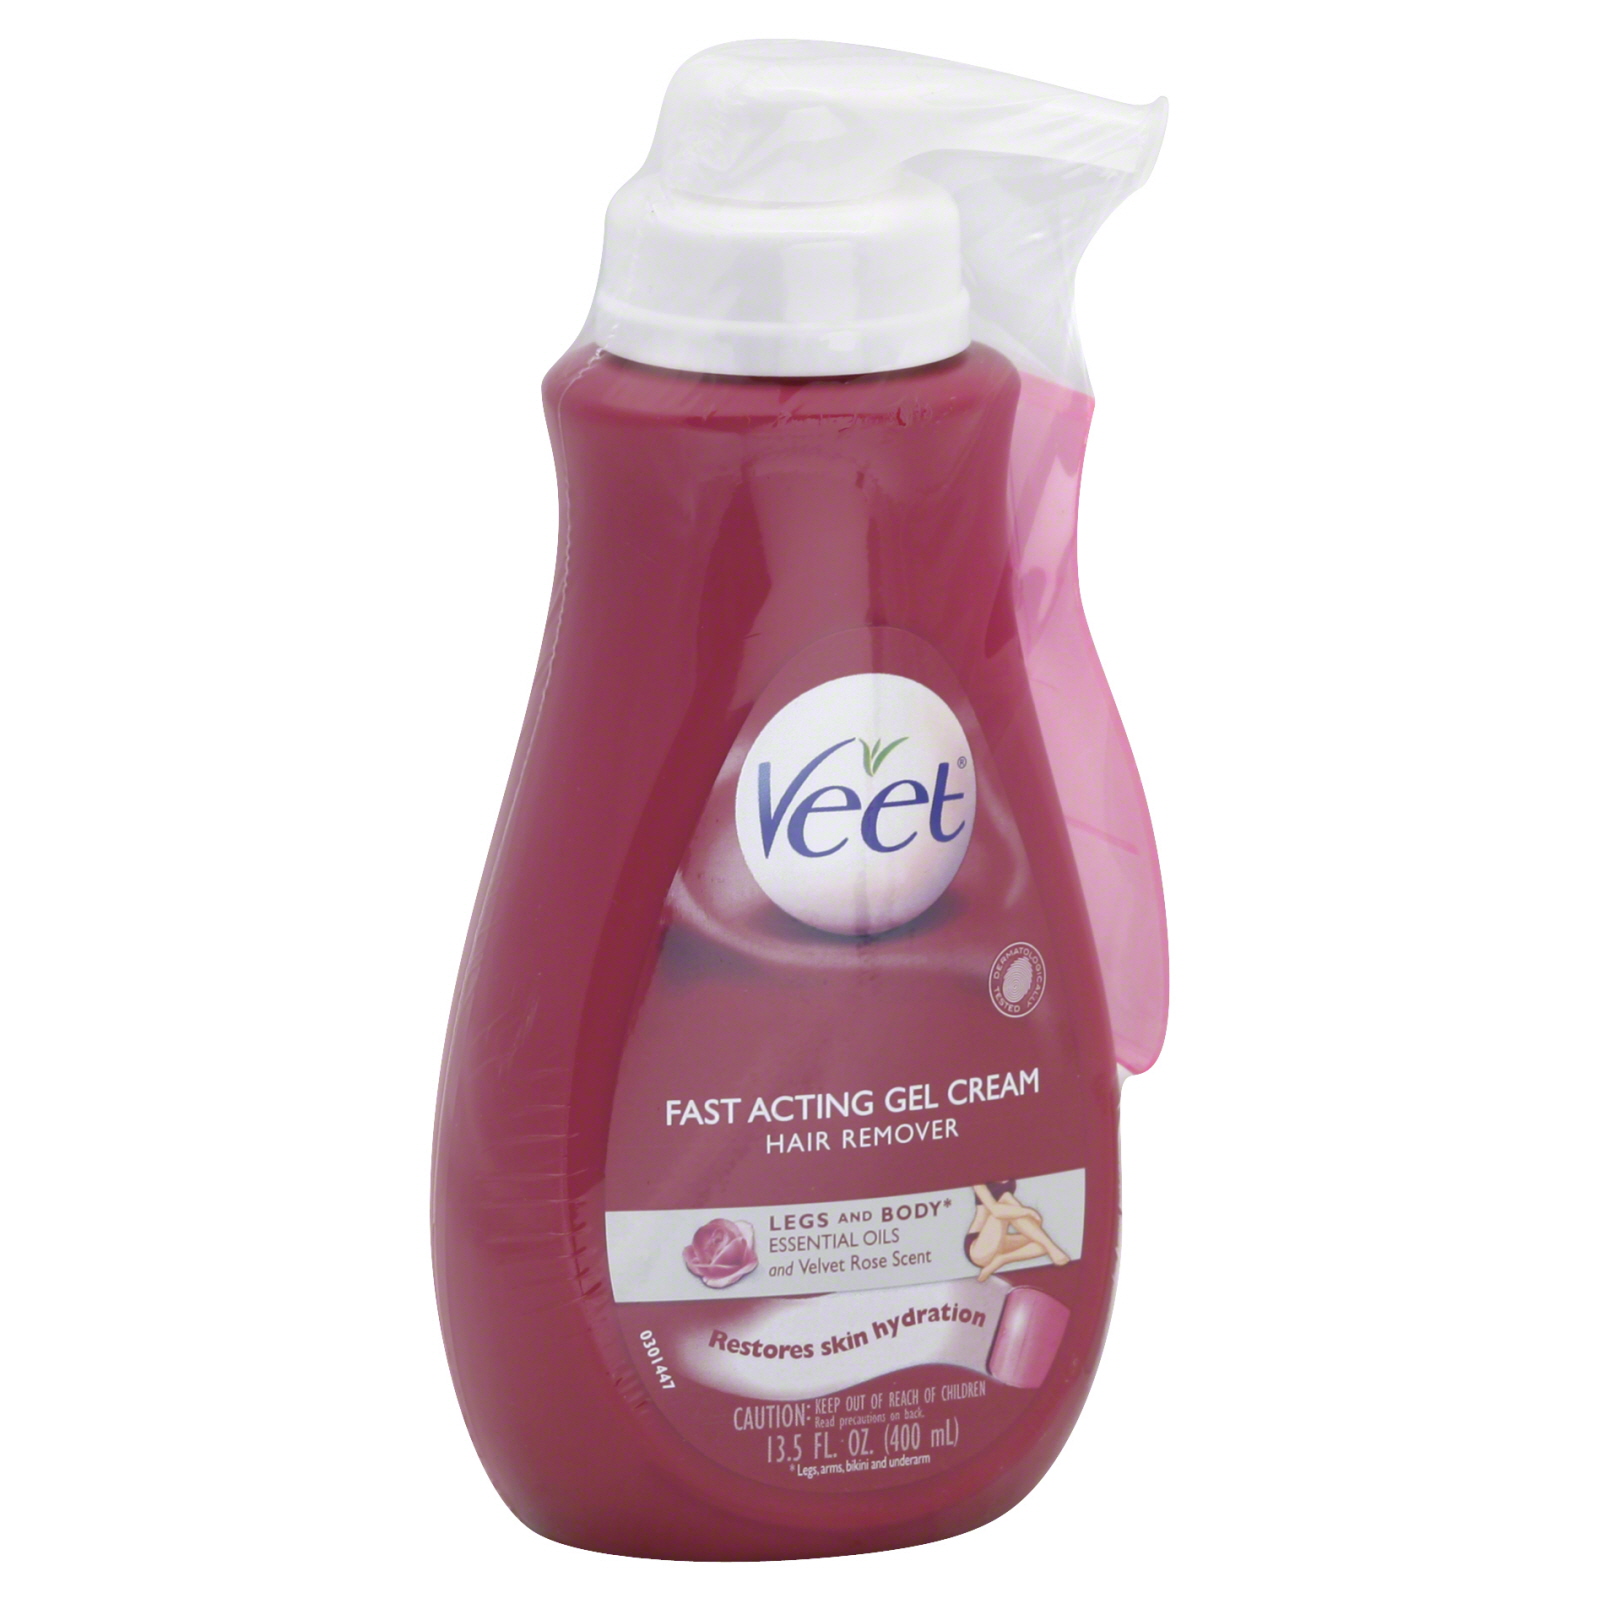 Veet Gel Cream Pump Hair Remover With Essential Oils And Velvet Rose Scent 13.50 oz.